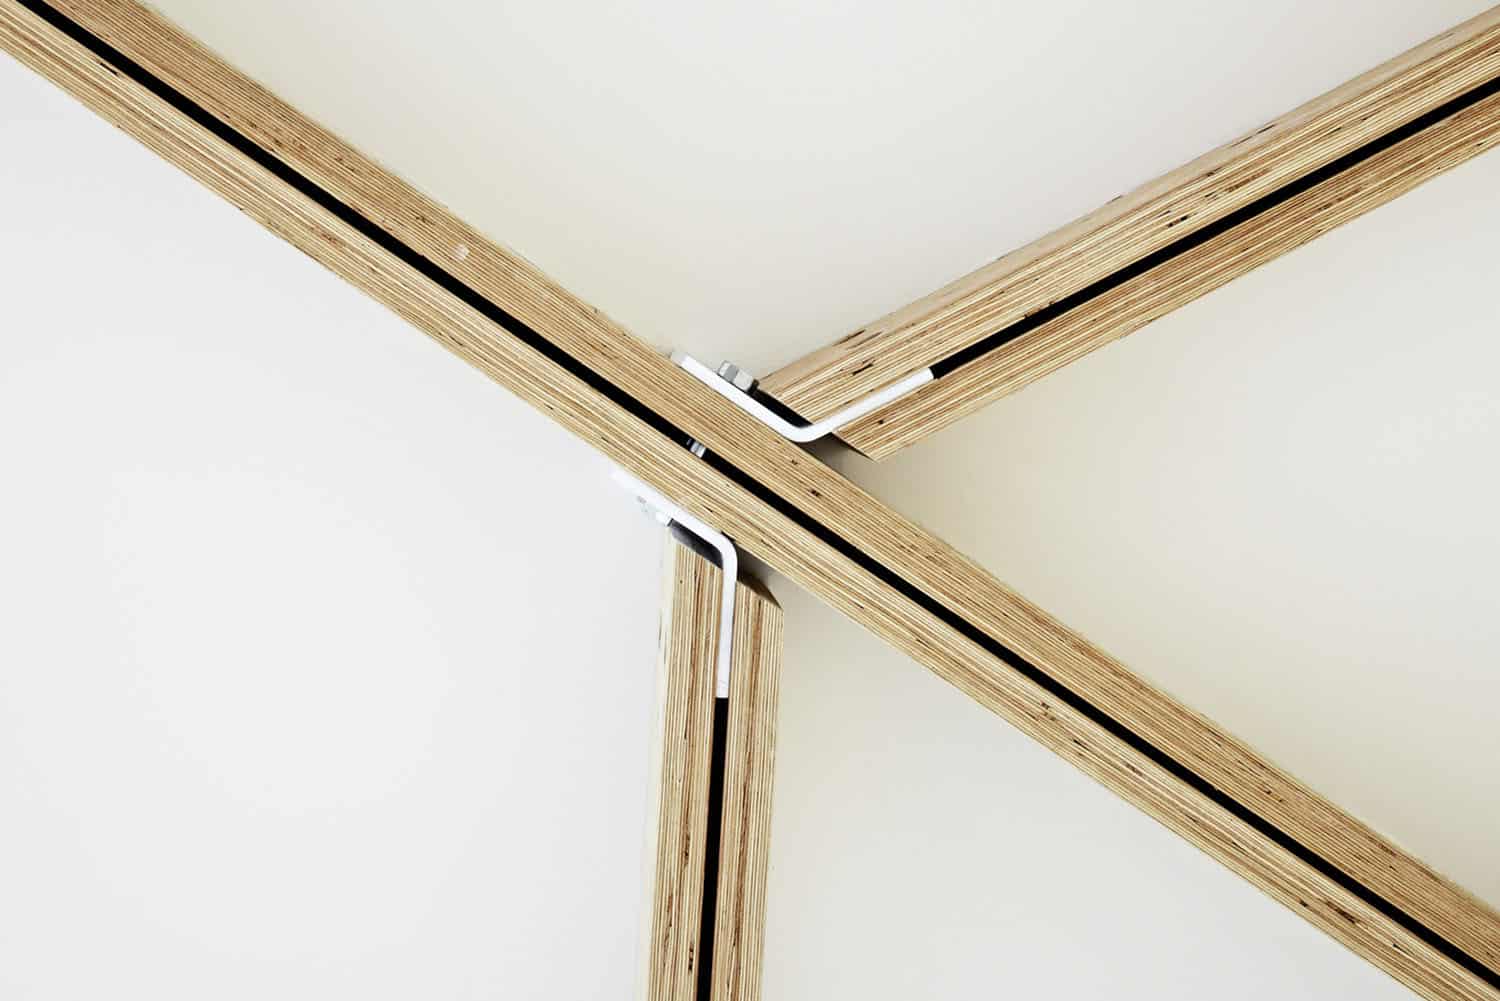 modern-prefabricated-home-ceiling-detail